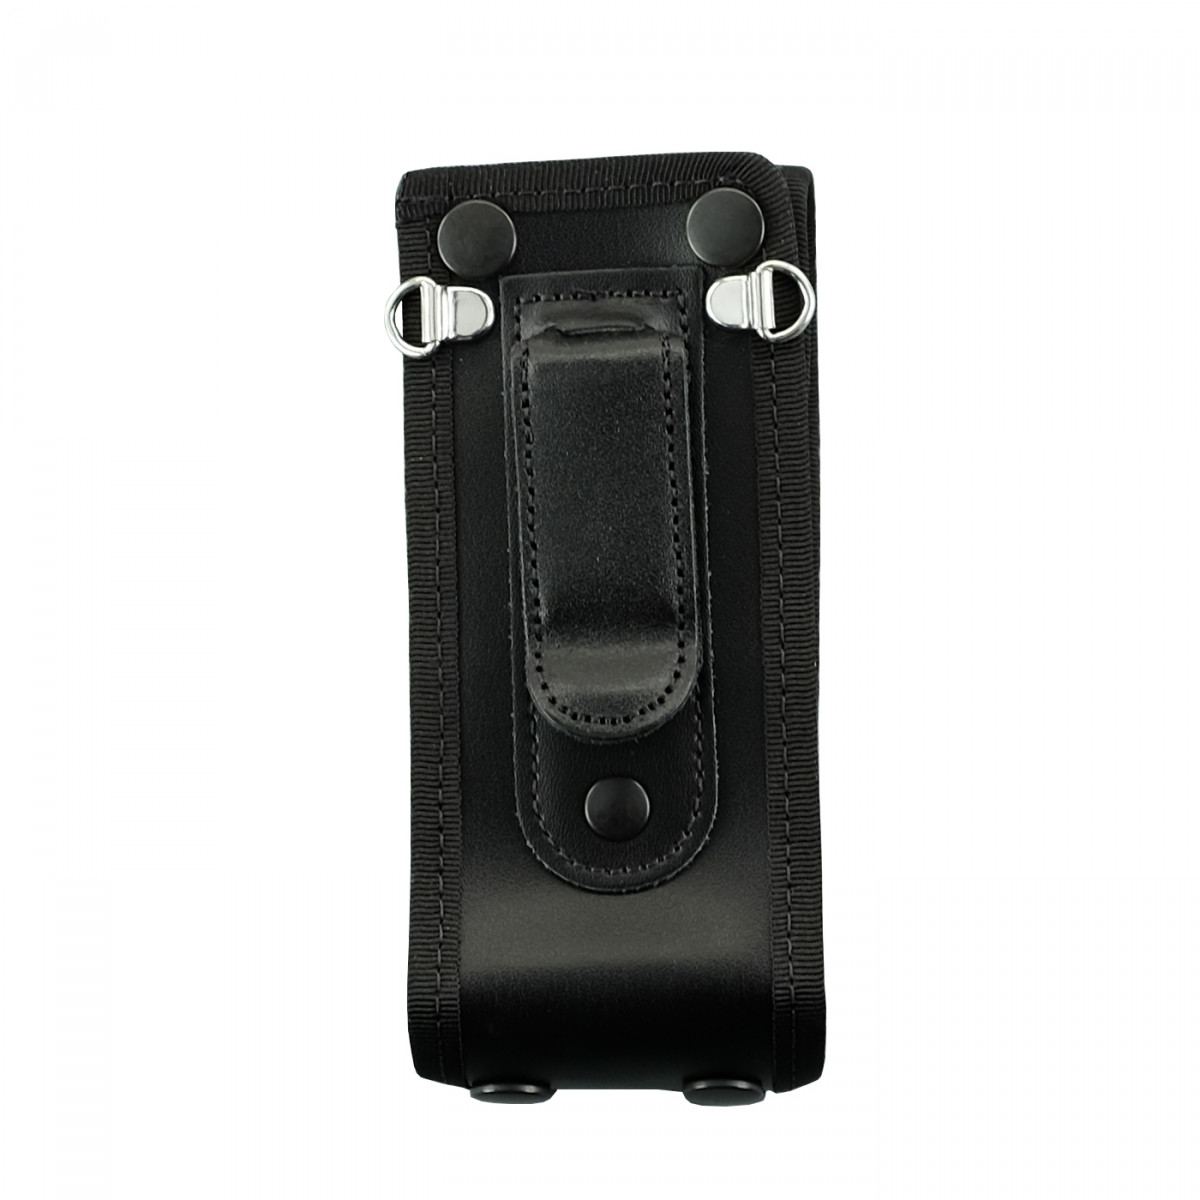 SEPURA lightweight leather case with belt clip, for SC20 300-01385